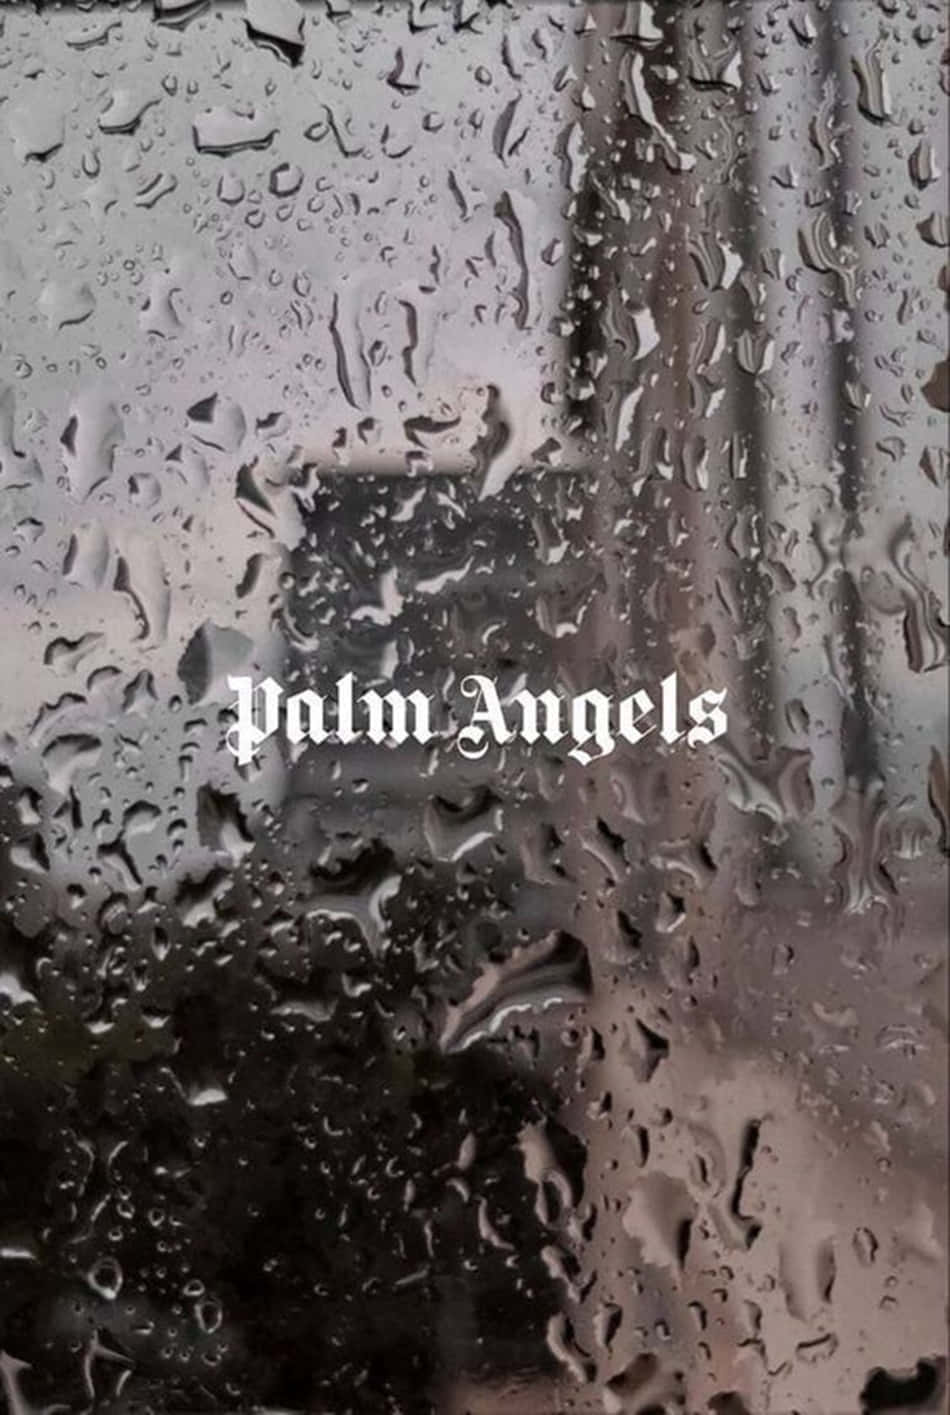 Download Palm Angels - Raindrops Cover Art Wallpaper | Wallpapers.com